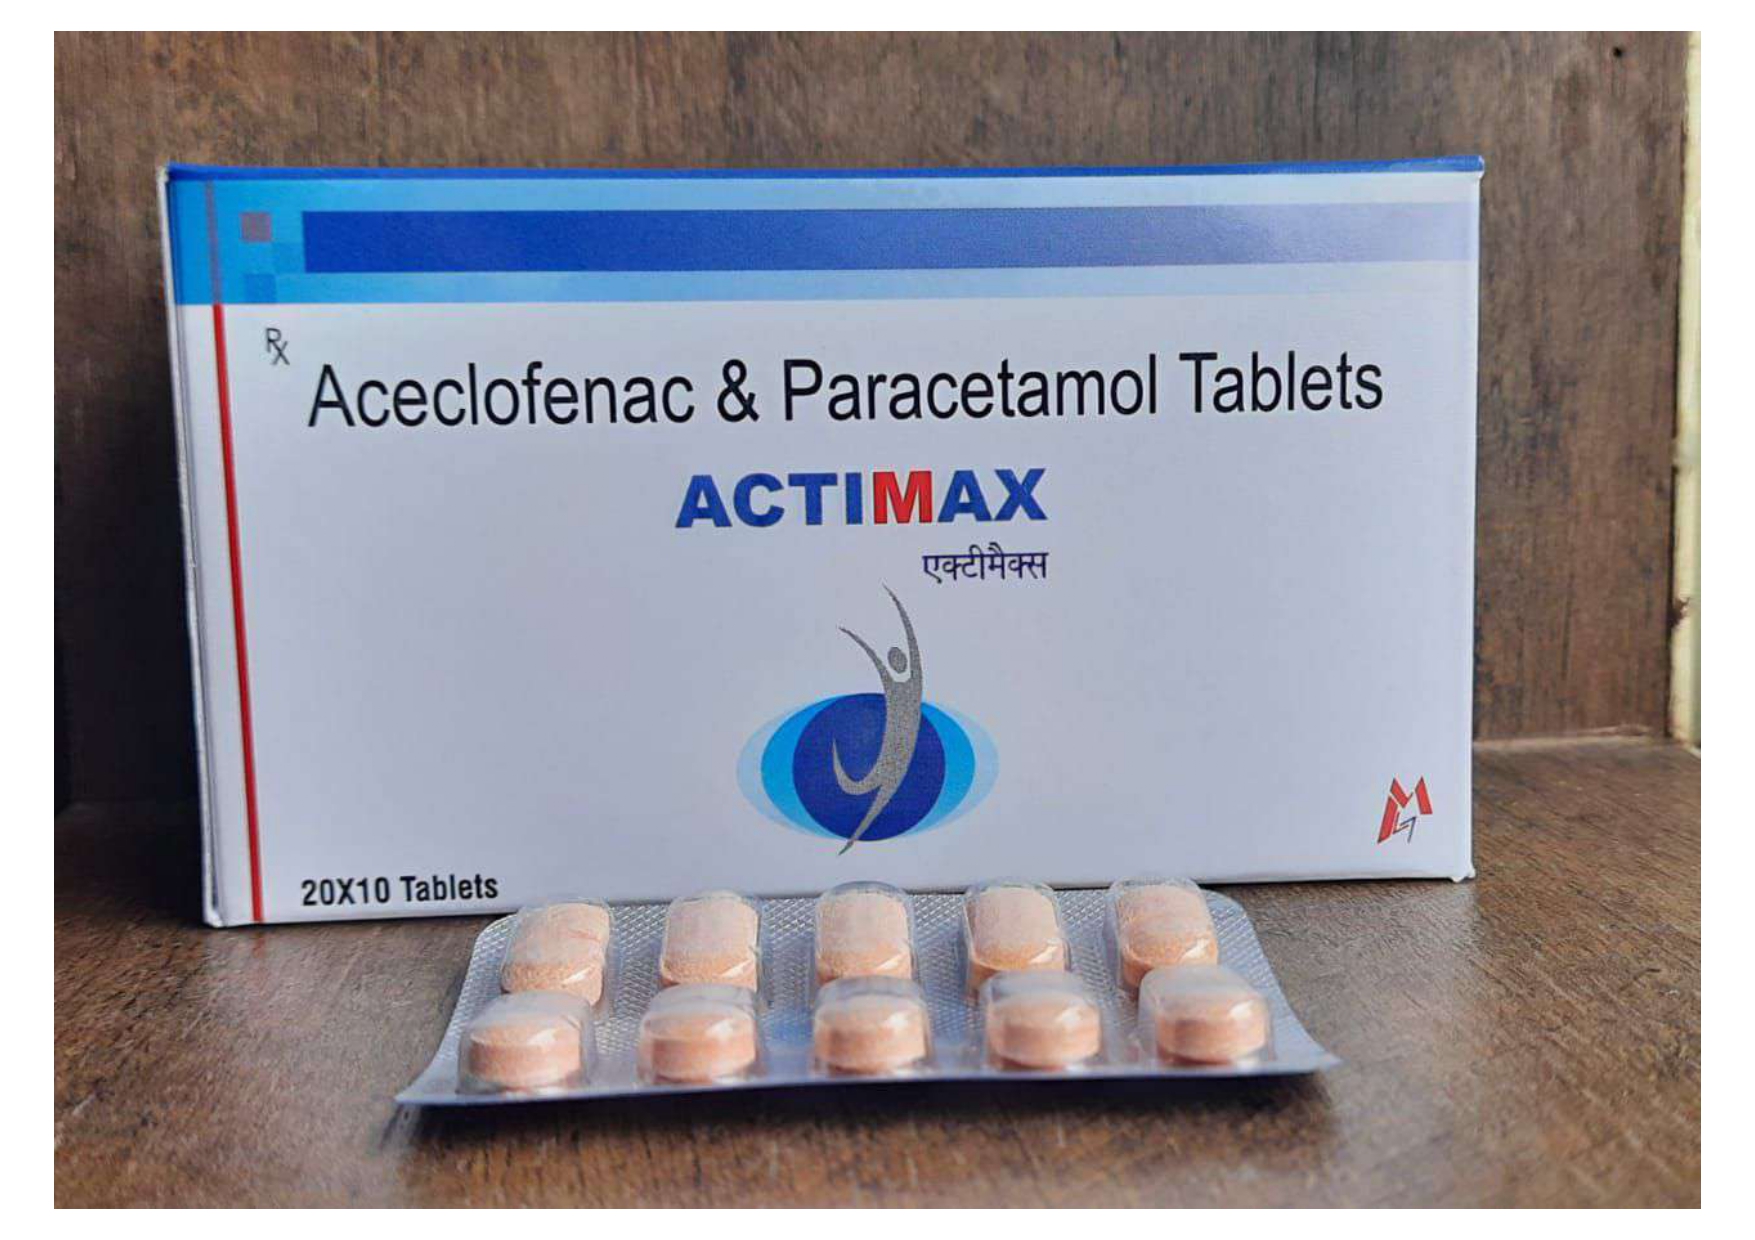 aceclofenac 100mg + paracetamol 325mg tablets